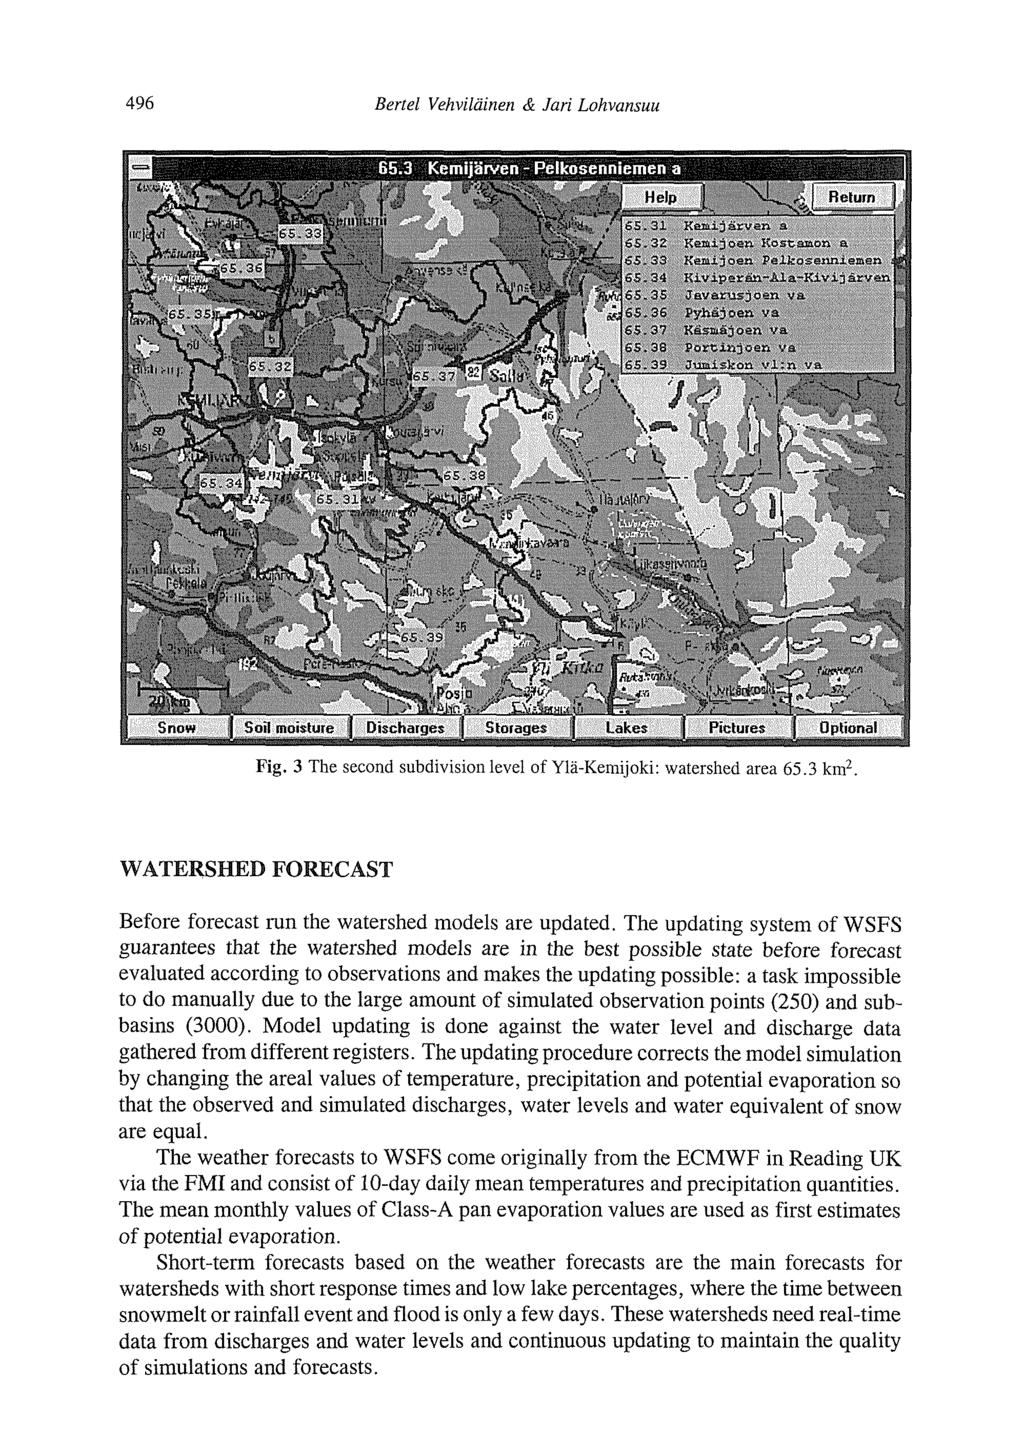 496 Bertel Vehvilàinen & Jari Lohvansuu bnnw Suil inuivtuii; Di.:c:hdi'ji:s Sturdy'" I <)ko: Pii;tun:T Uphonul Fig. 3 The second subdivision level of Yla-Kemijoki: watershed area 65.3 km 2.